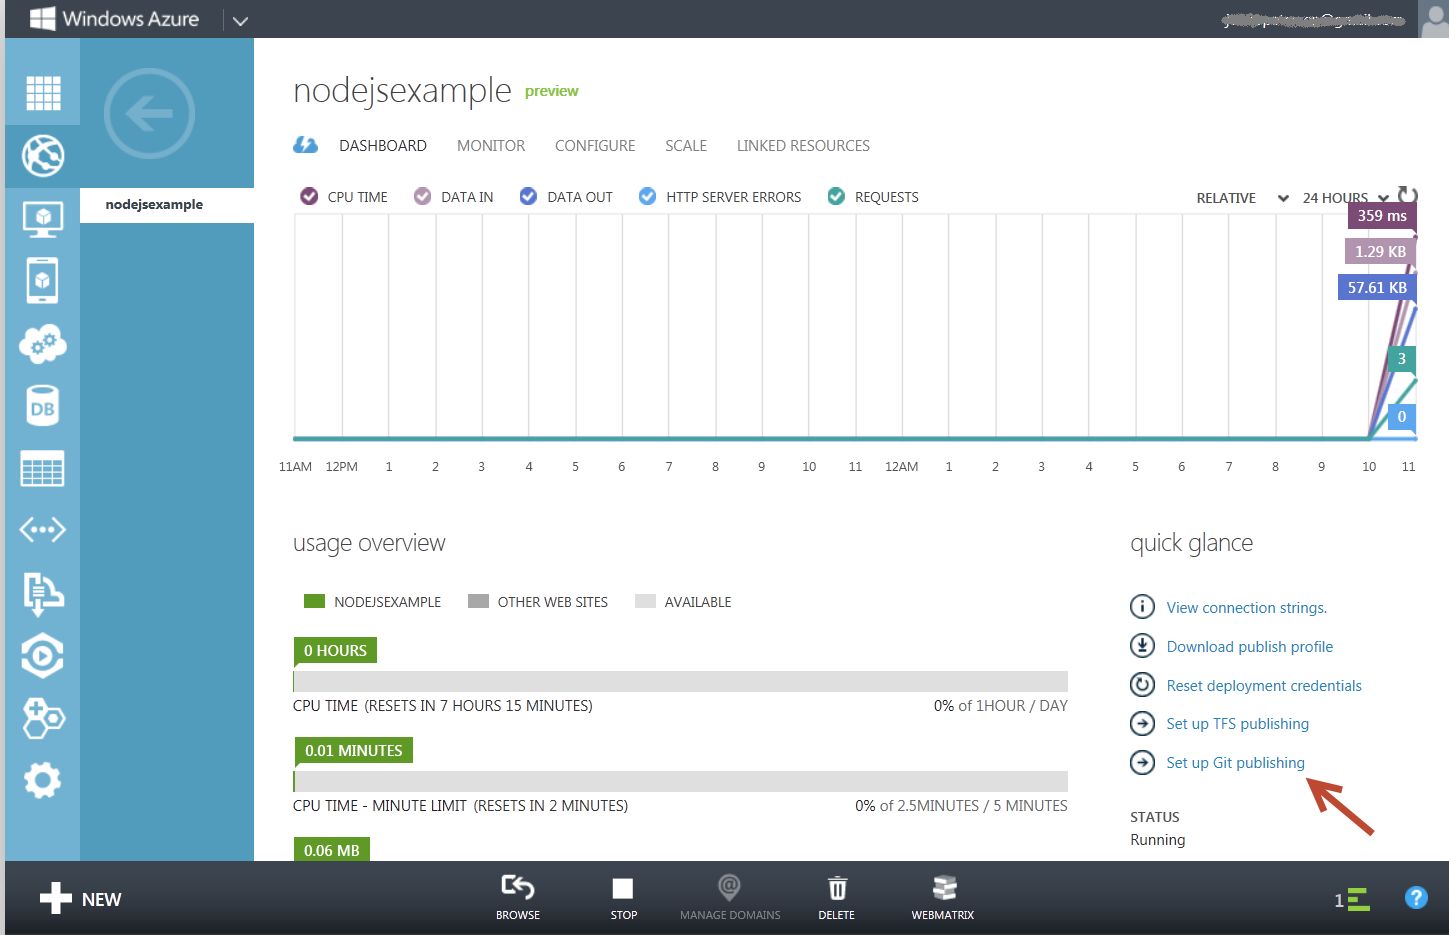 Figure 6: The nodejsexample Azure website dashboard.